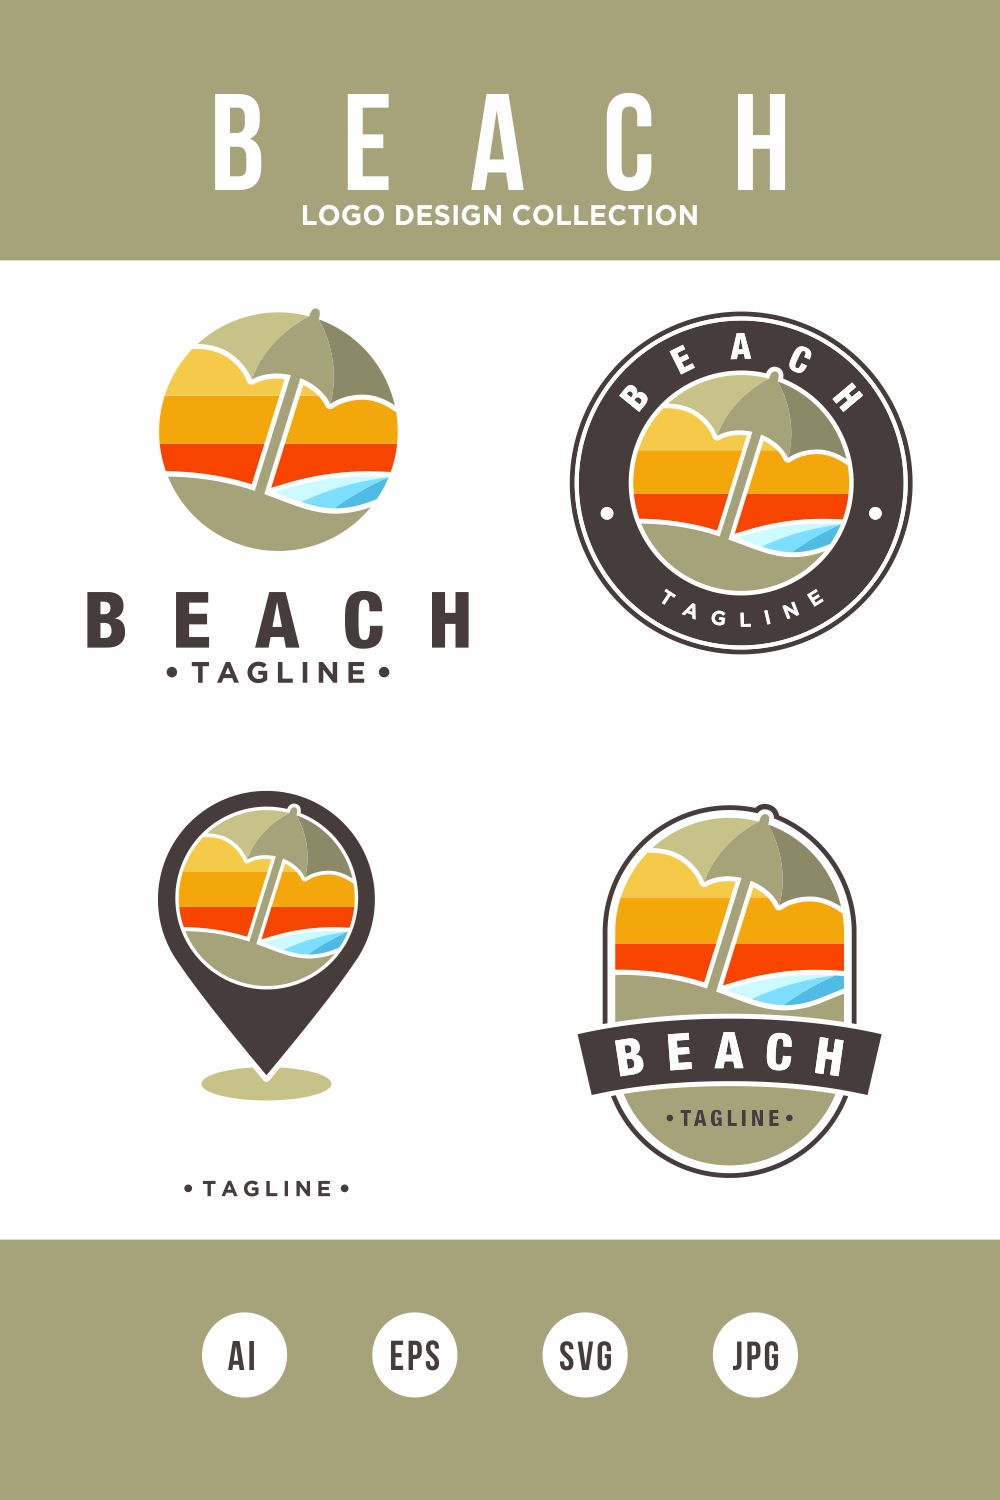 Beach logo design collection with beach umbrella Vector - only 10$ pinterest preview image.